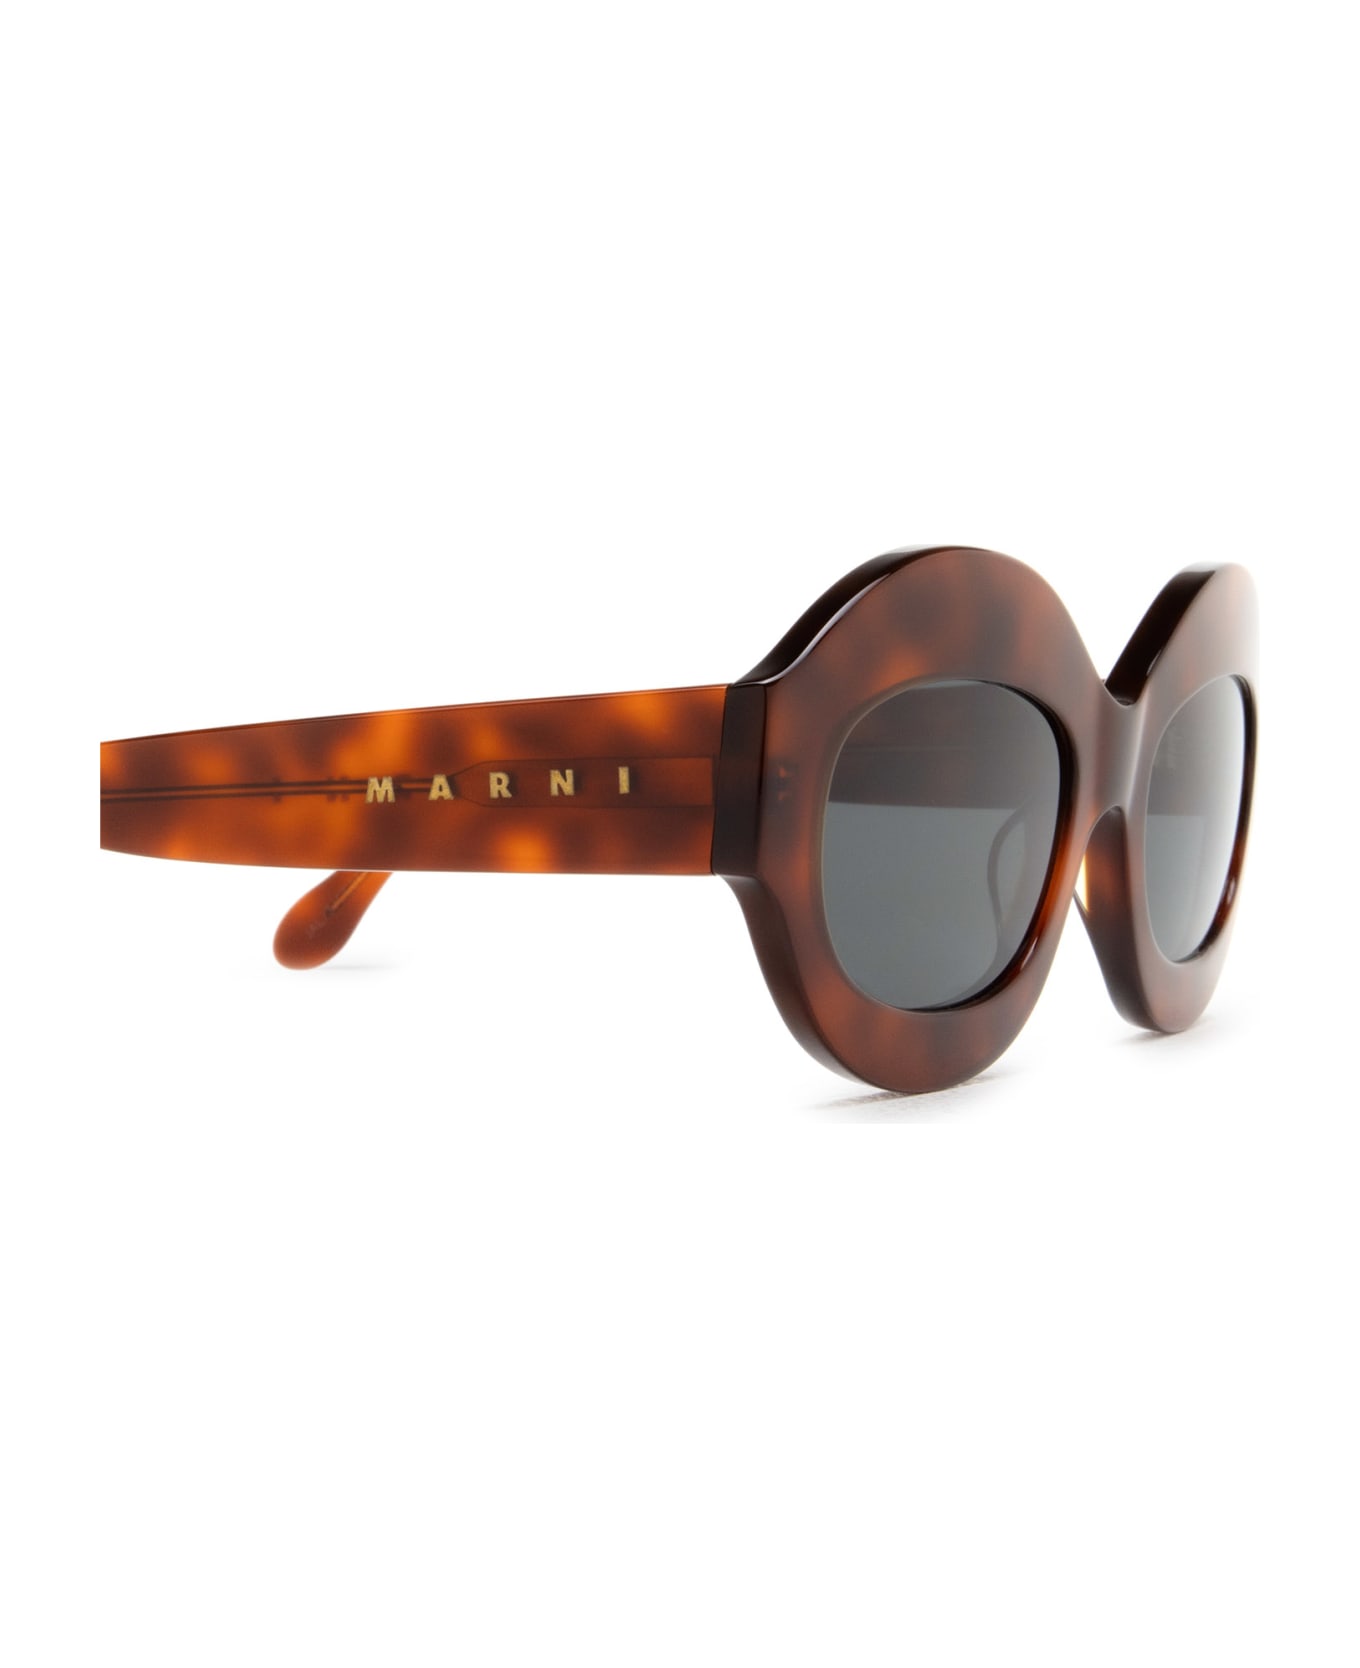 Marni Eyewear Ik Kil Cenote Havana Diversa Sunglasses - Havana Diversa